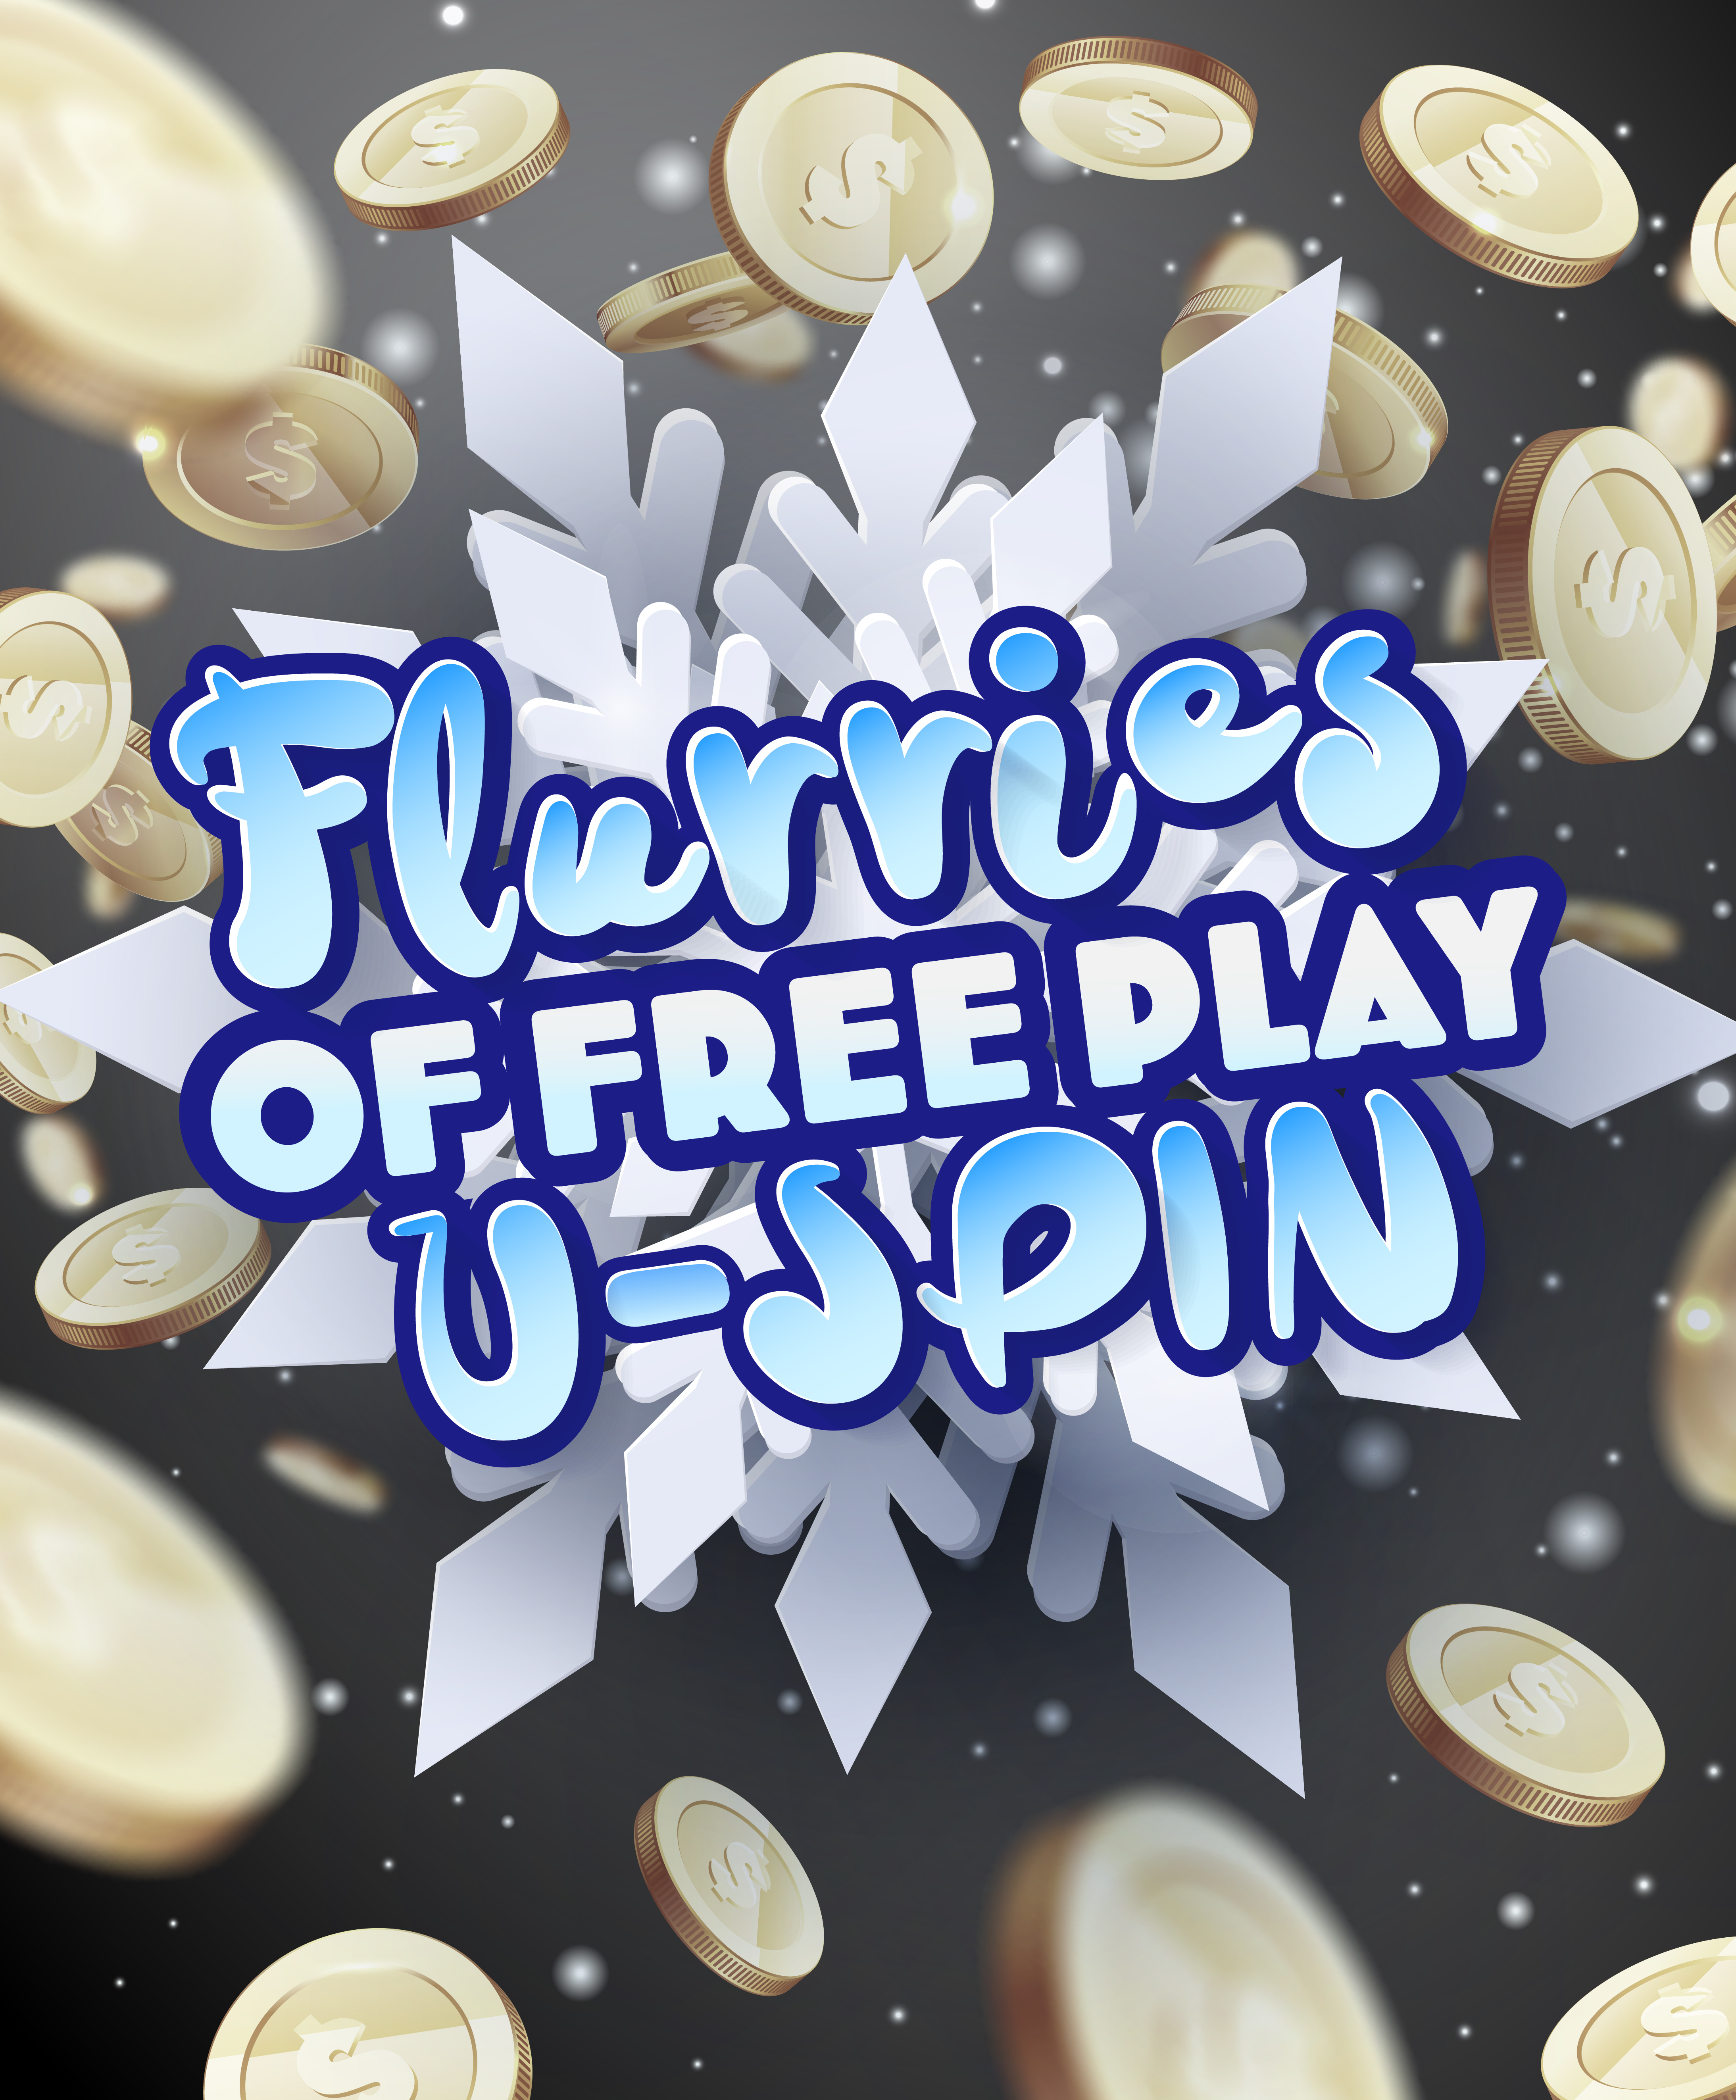 Flurries of Free Play U-Spin